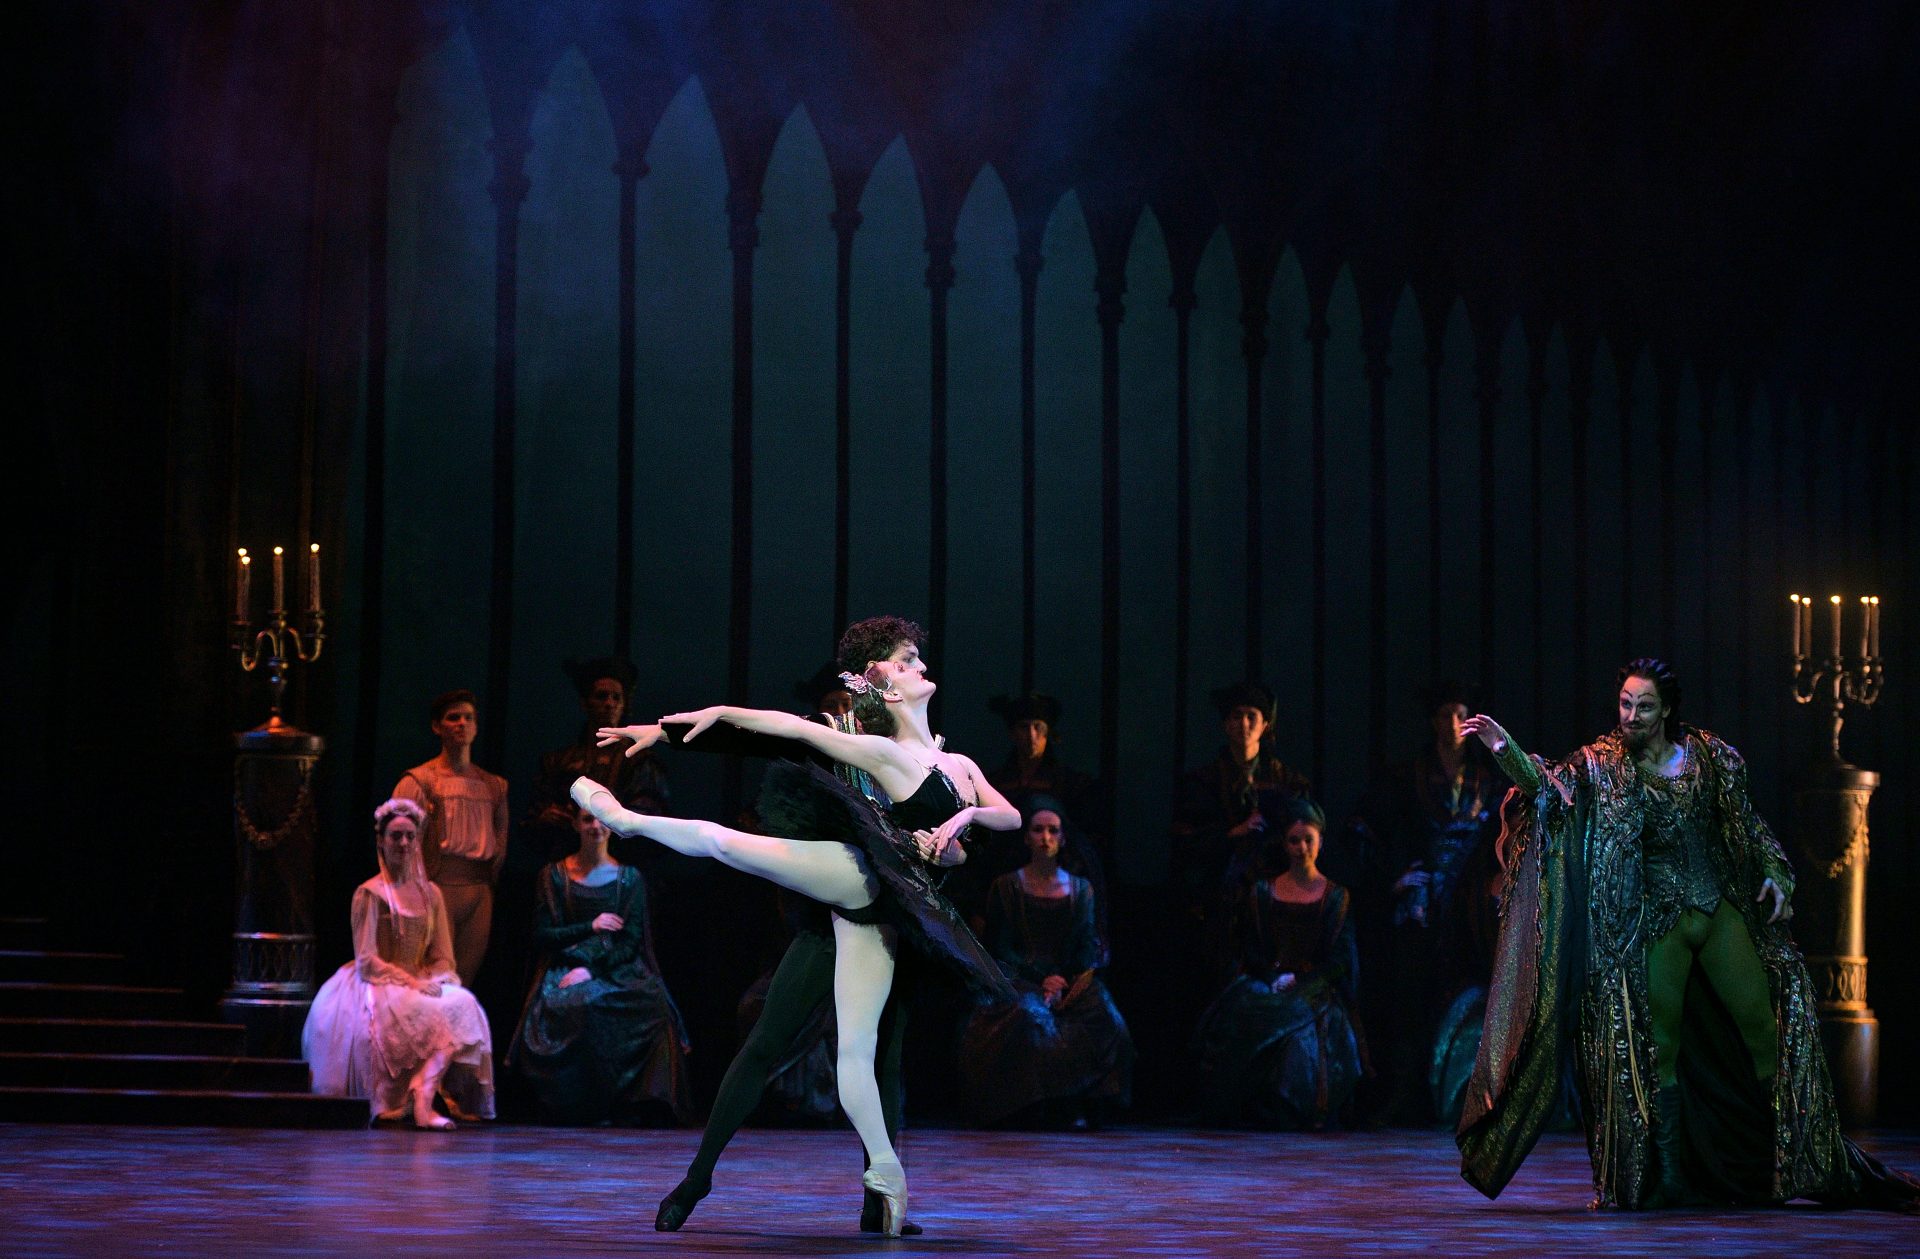 Jurgita Dronina as Odile and Isaac Hernández as Prince Siegfried and English National Ballet dancers in Swan Lake © Laurent Liotardo